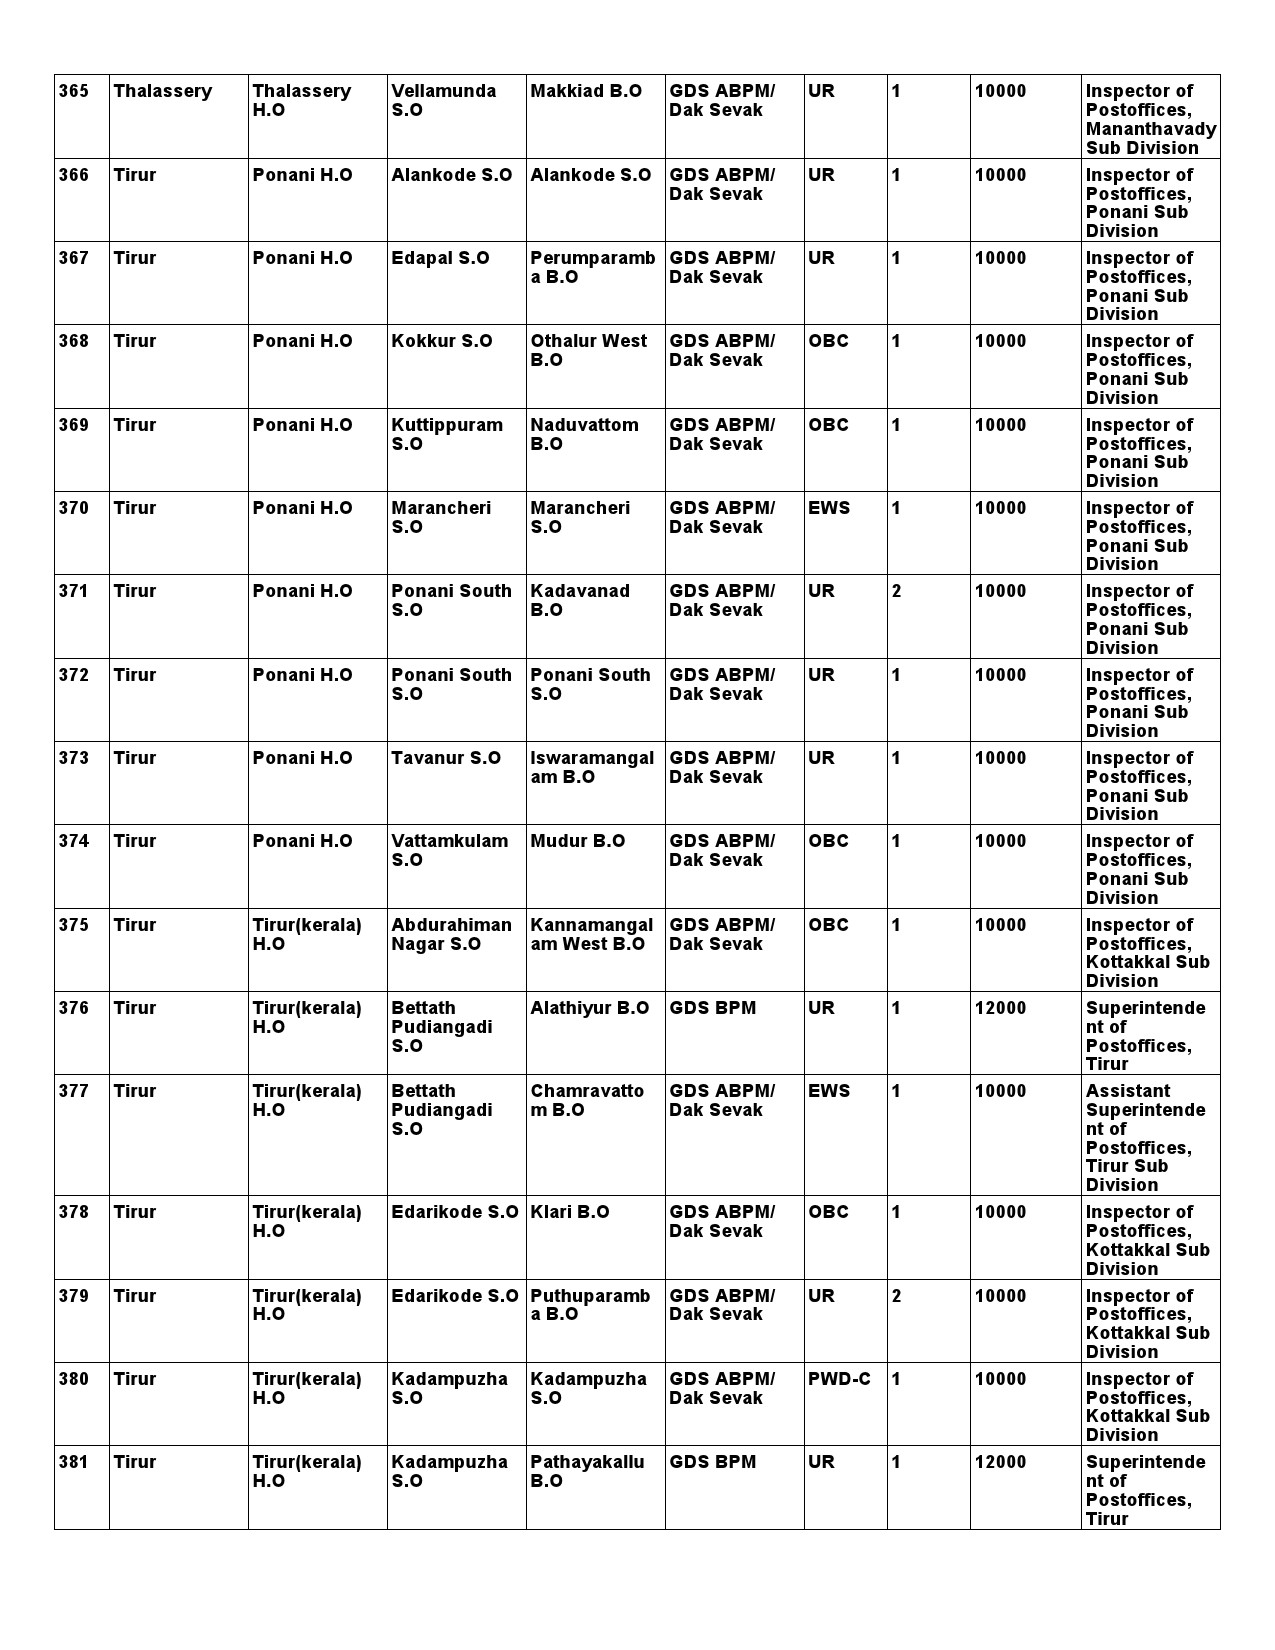 Kerala Postal Circle GDS Recruitment 2021 notification - Notification Image 42